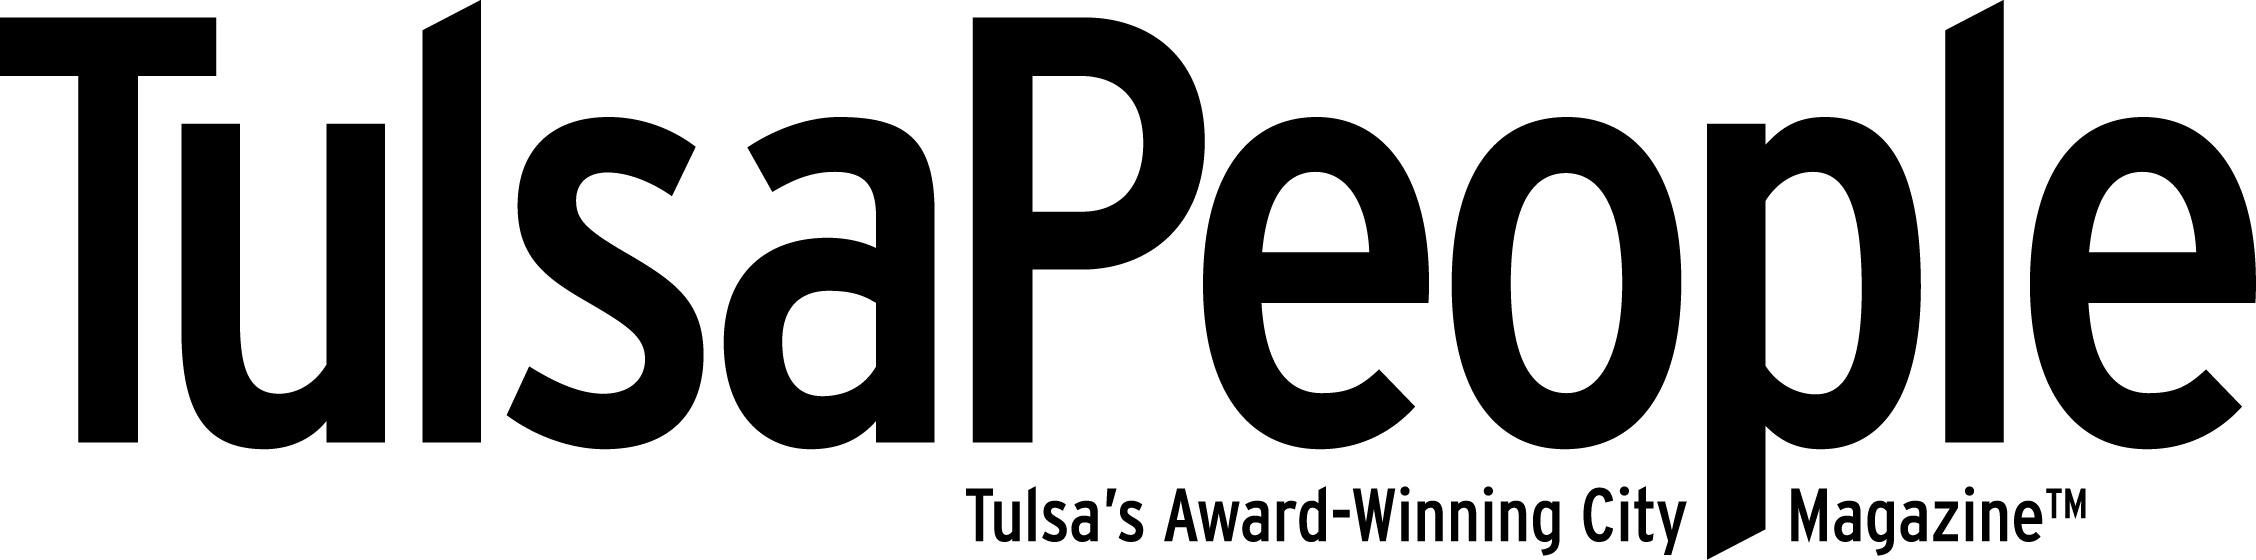 People Magazine Logo - CAN | Tulsa People magazine logo - CAN